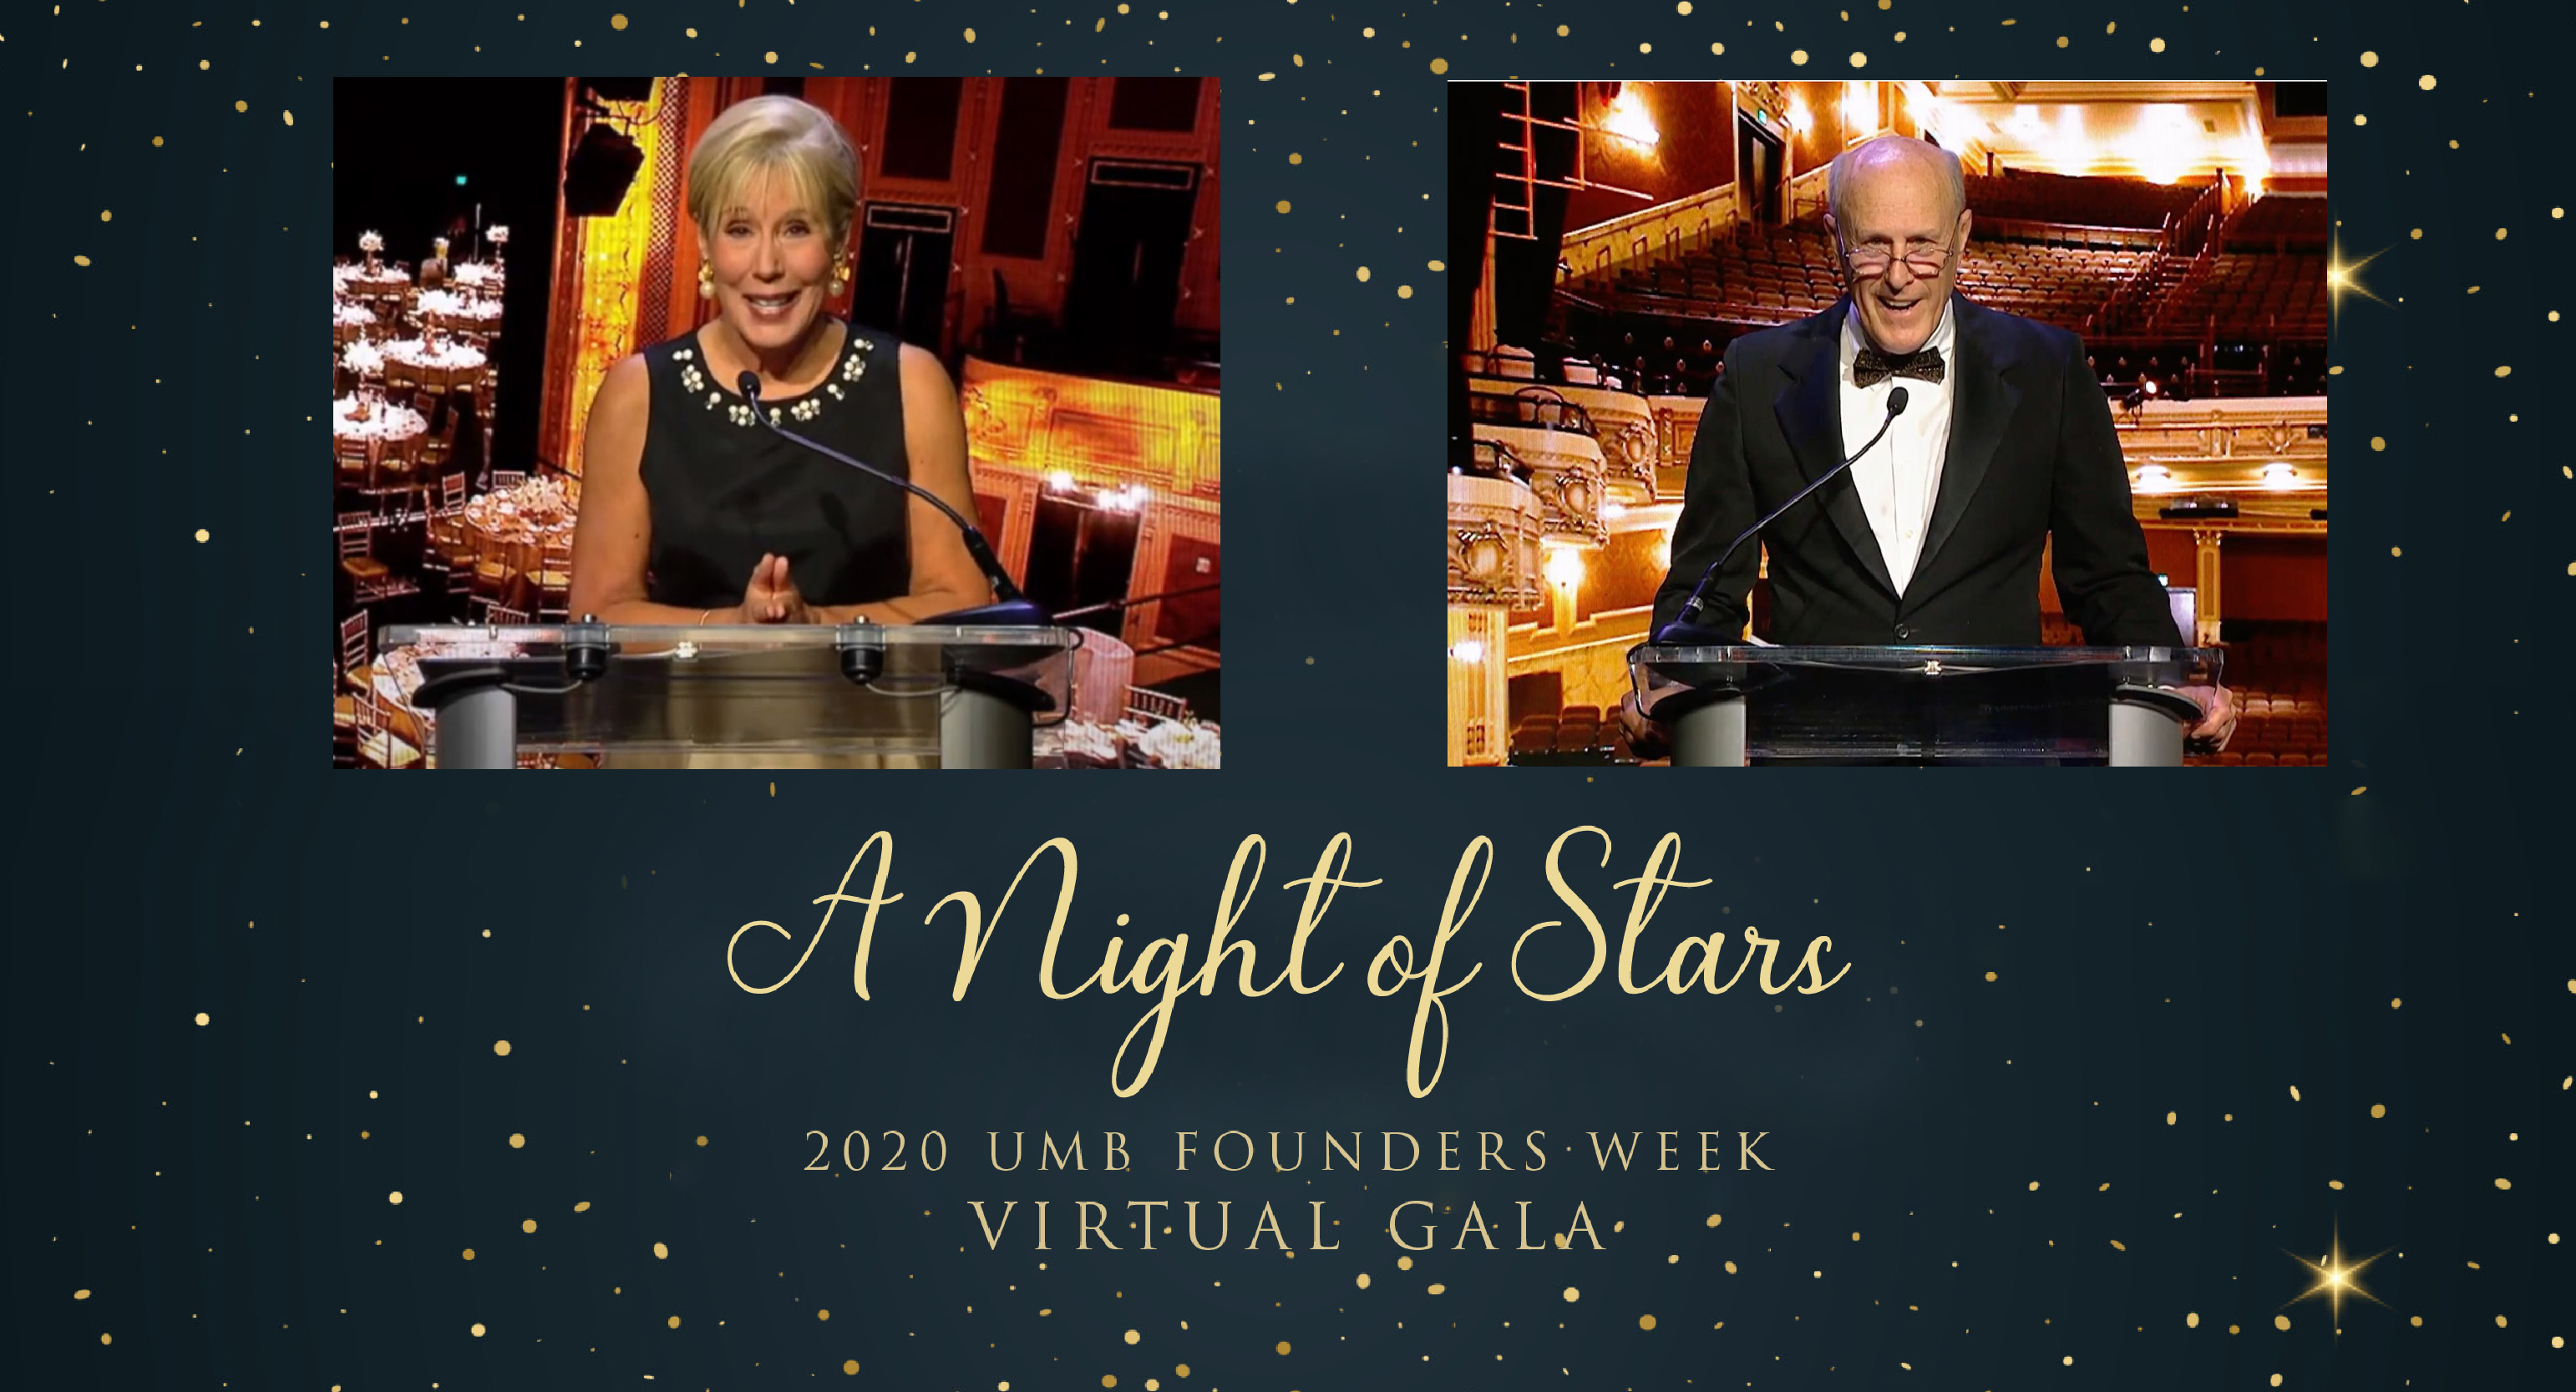 A Night of Stars - 2020 UMB Founders Week Virtual Gala